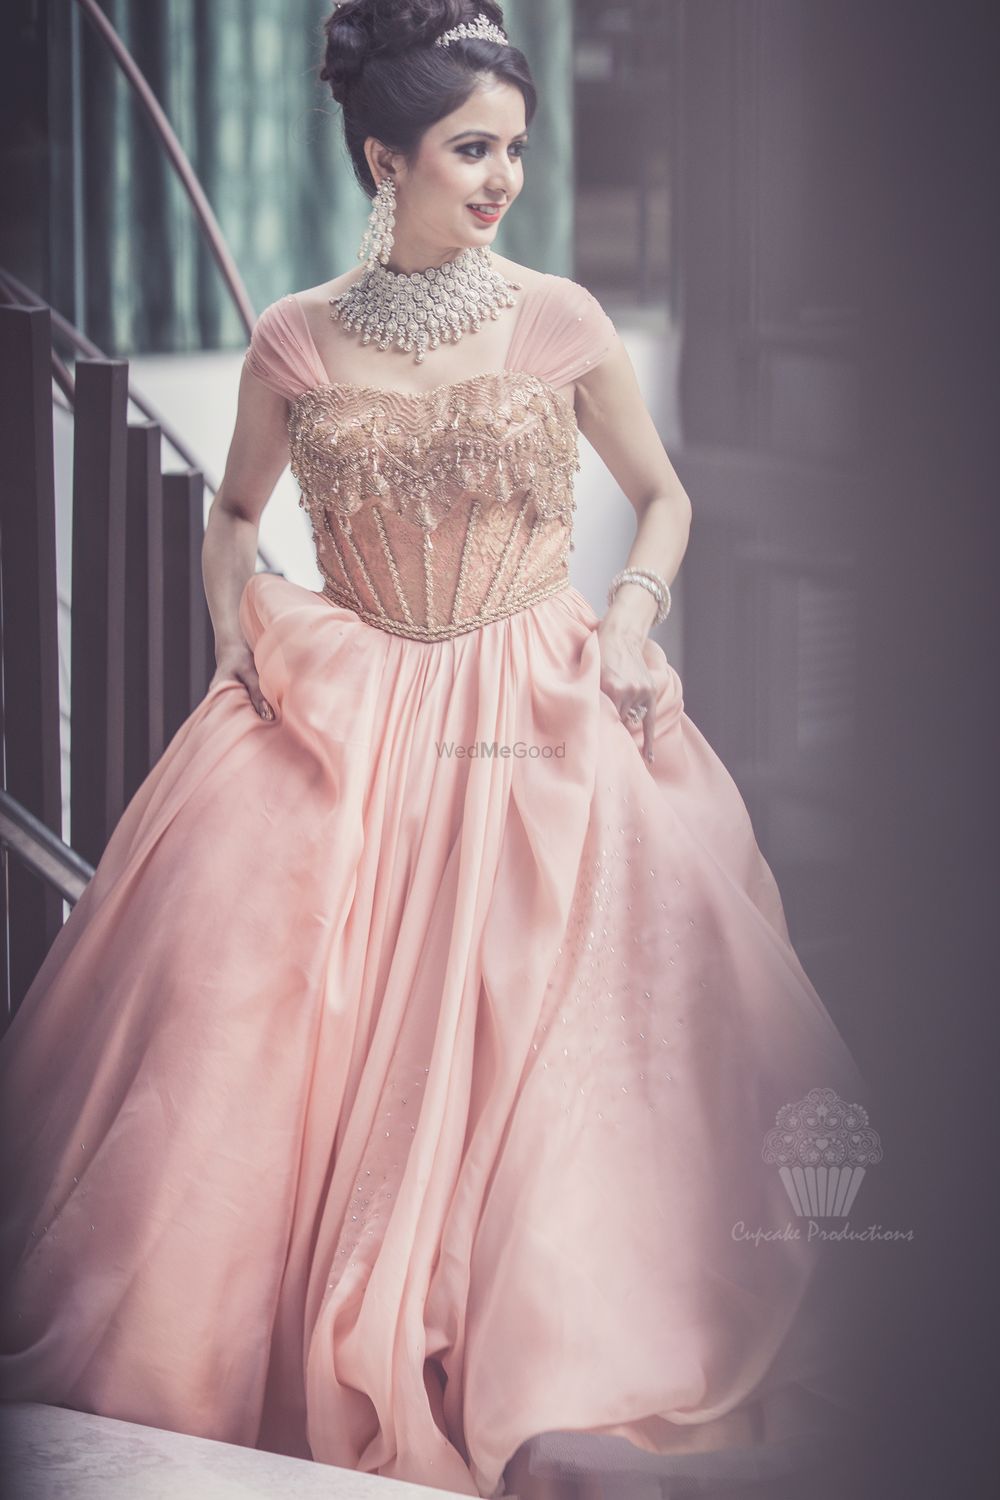 Photo of Peach gown worn by bride by Shantanu & nikhil